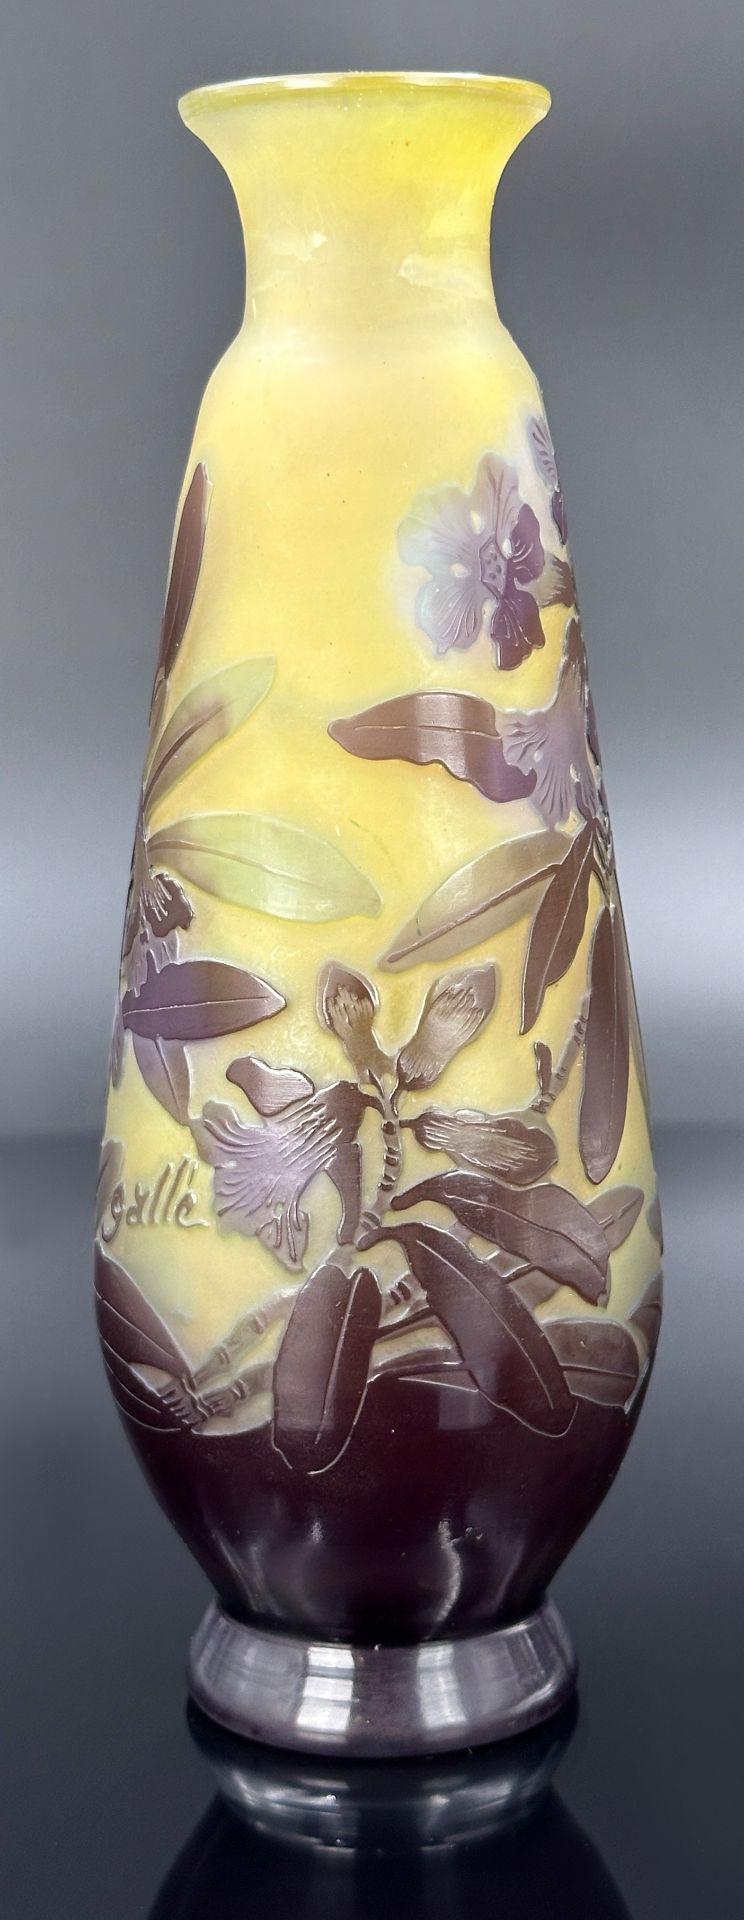 Small vase. Emile GALLÉ (1846 - 1904). Around 1900. - Image 5 of 10